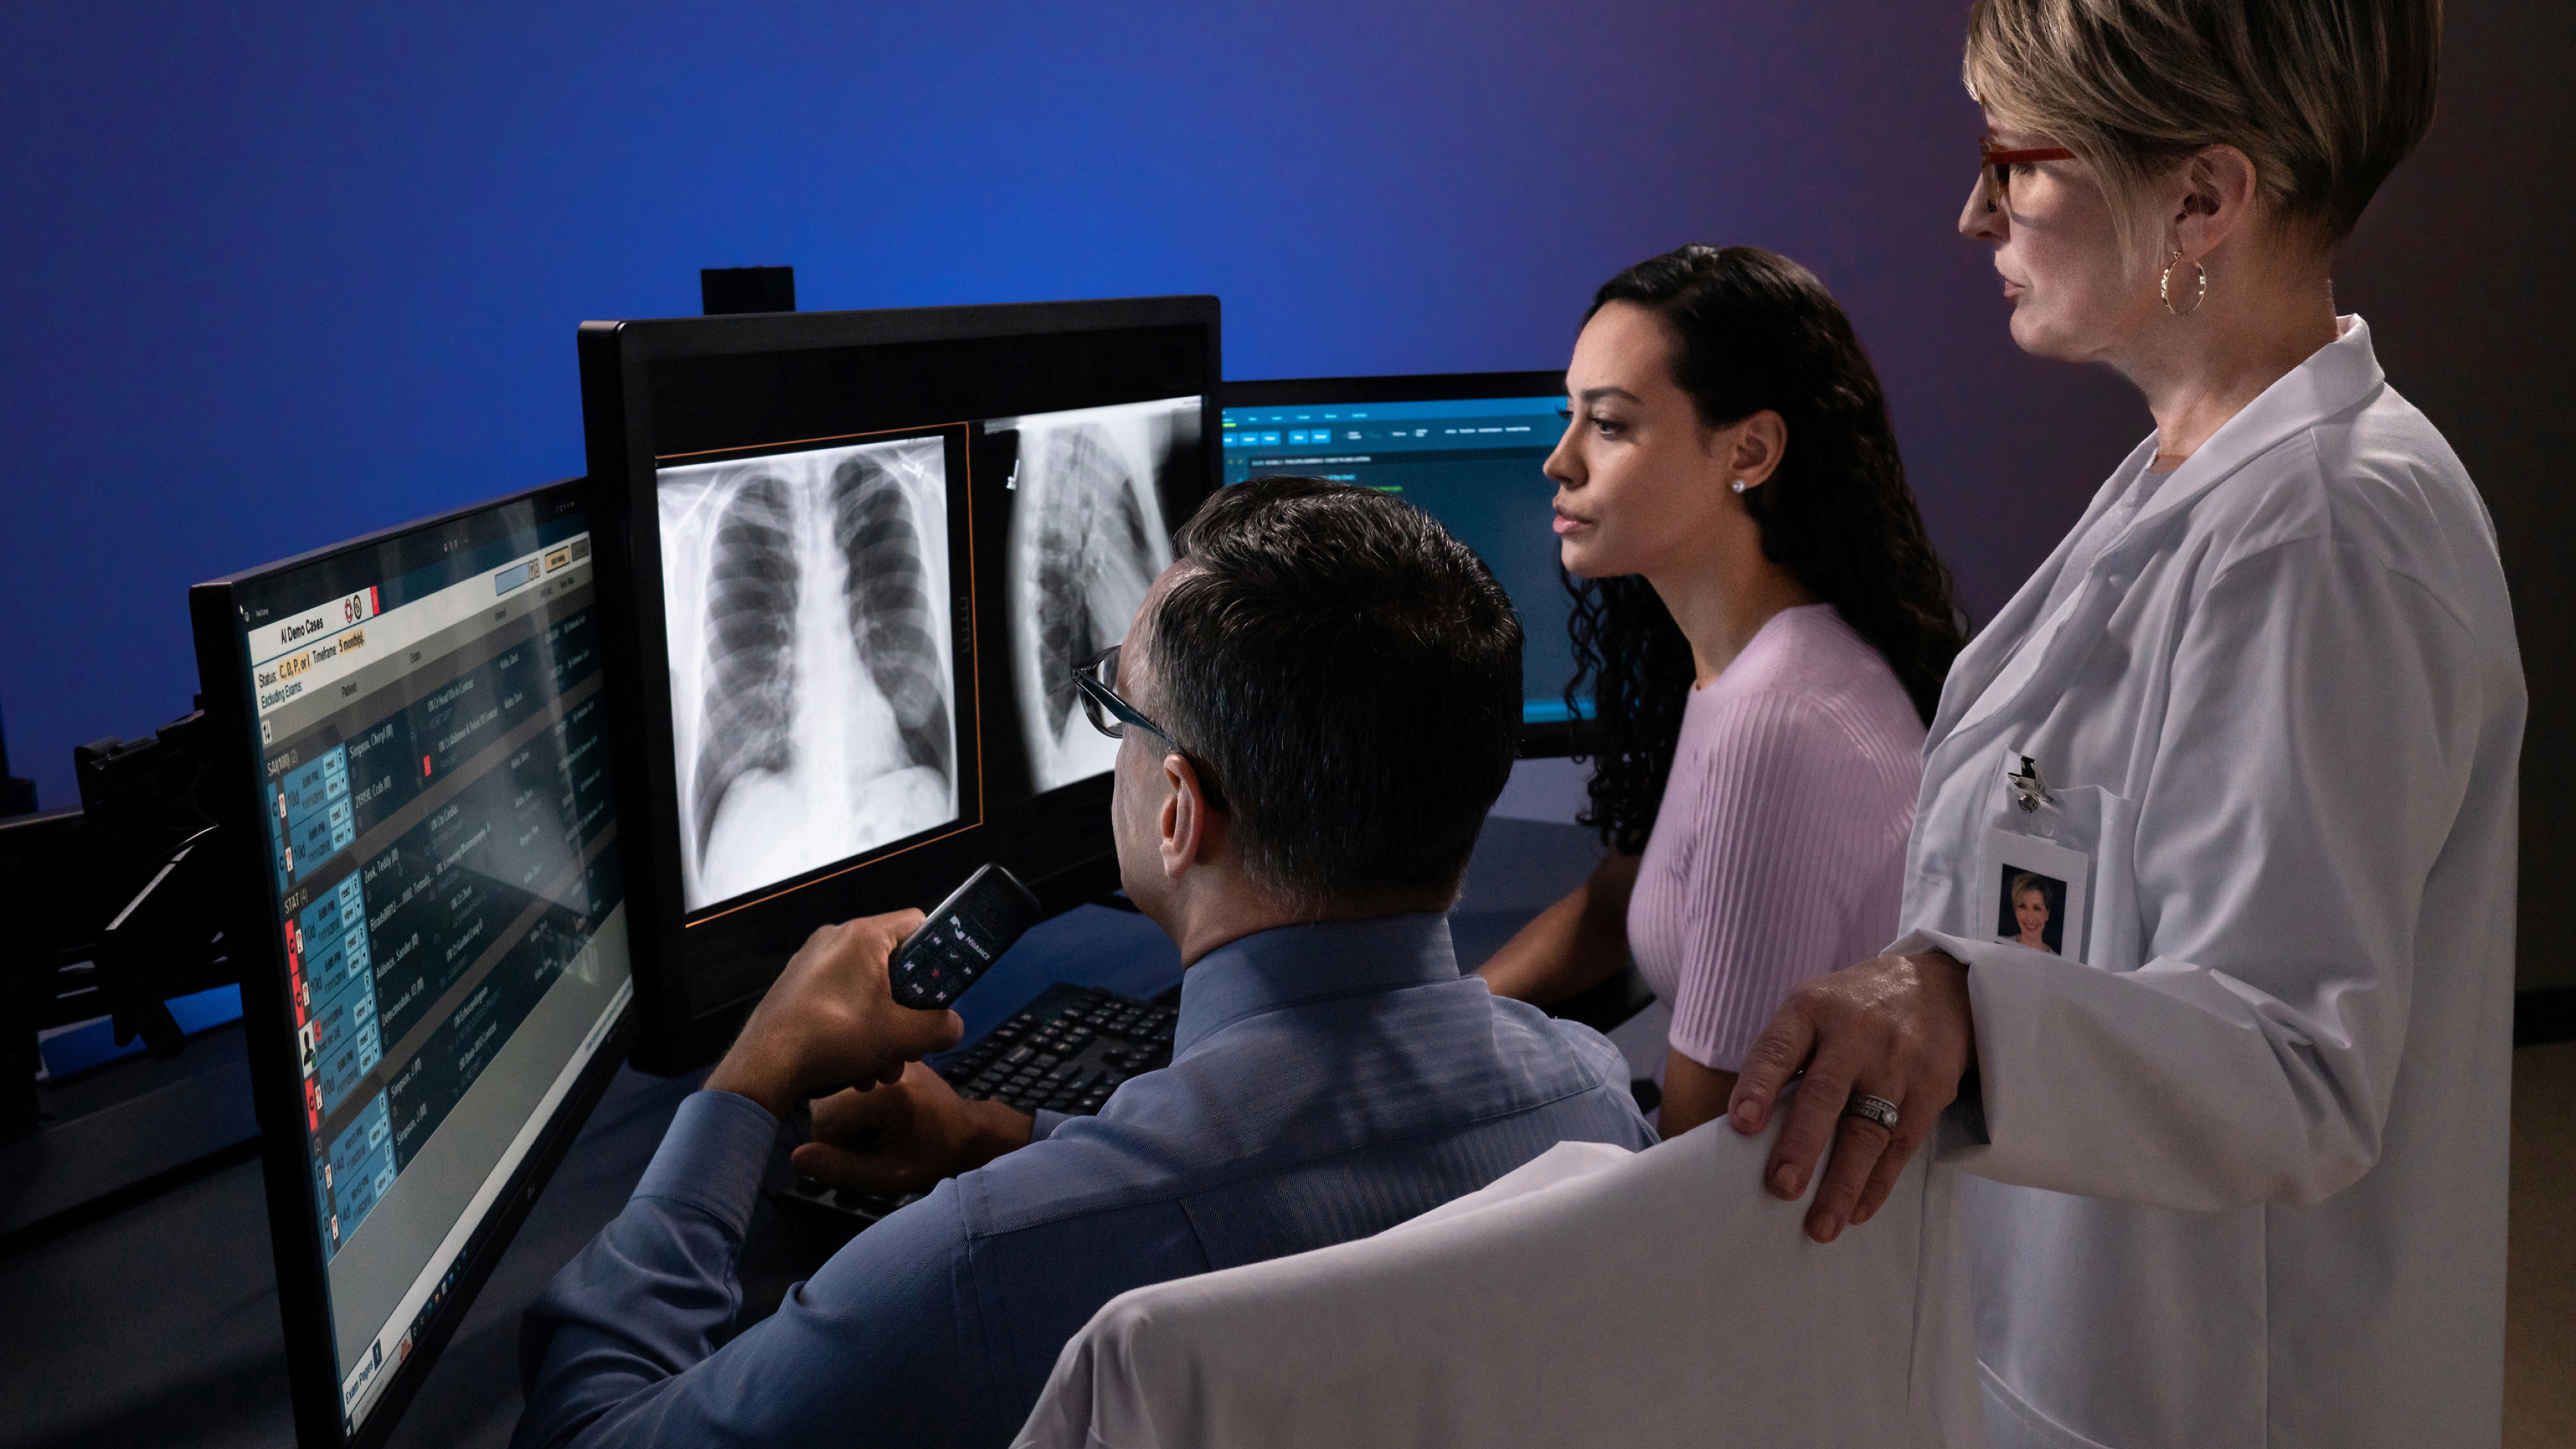 Grupa osób patrzących na obrazy x-ray